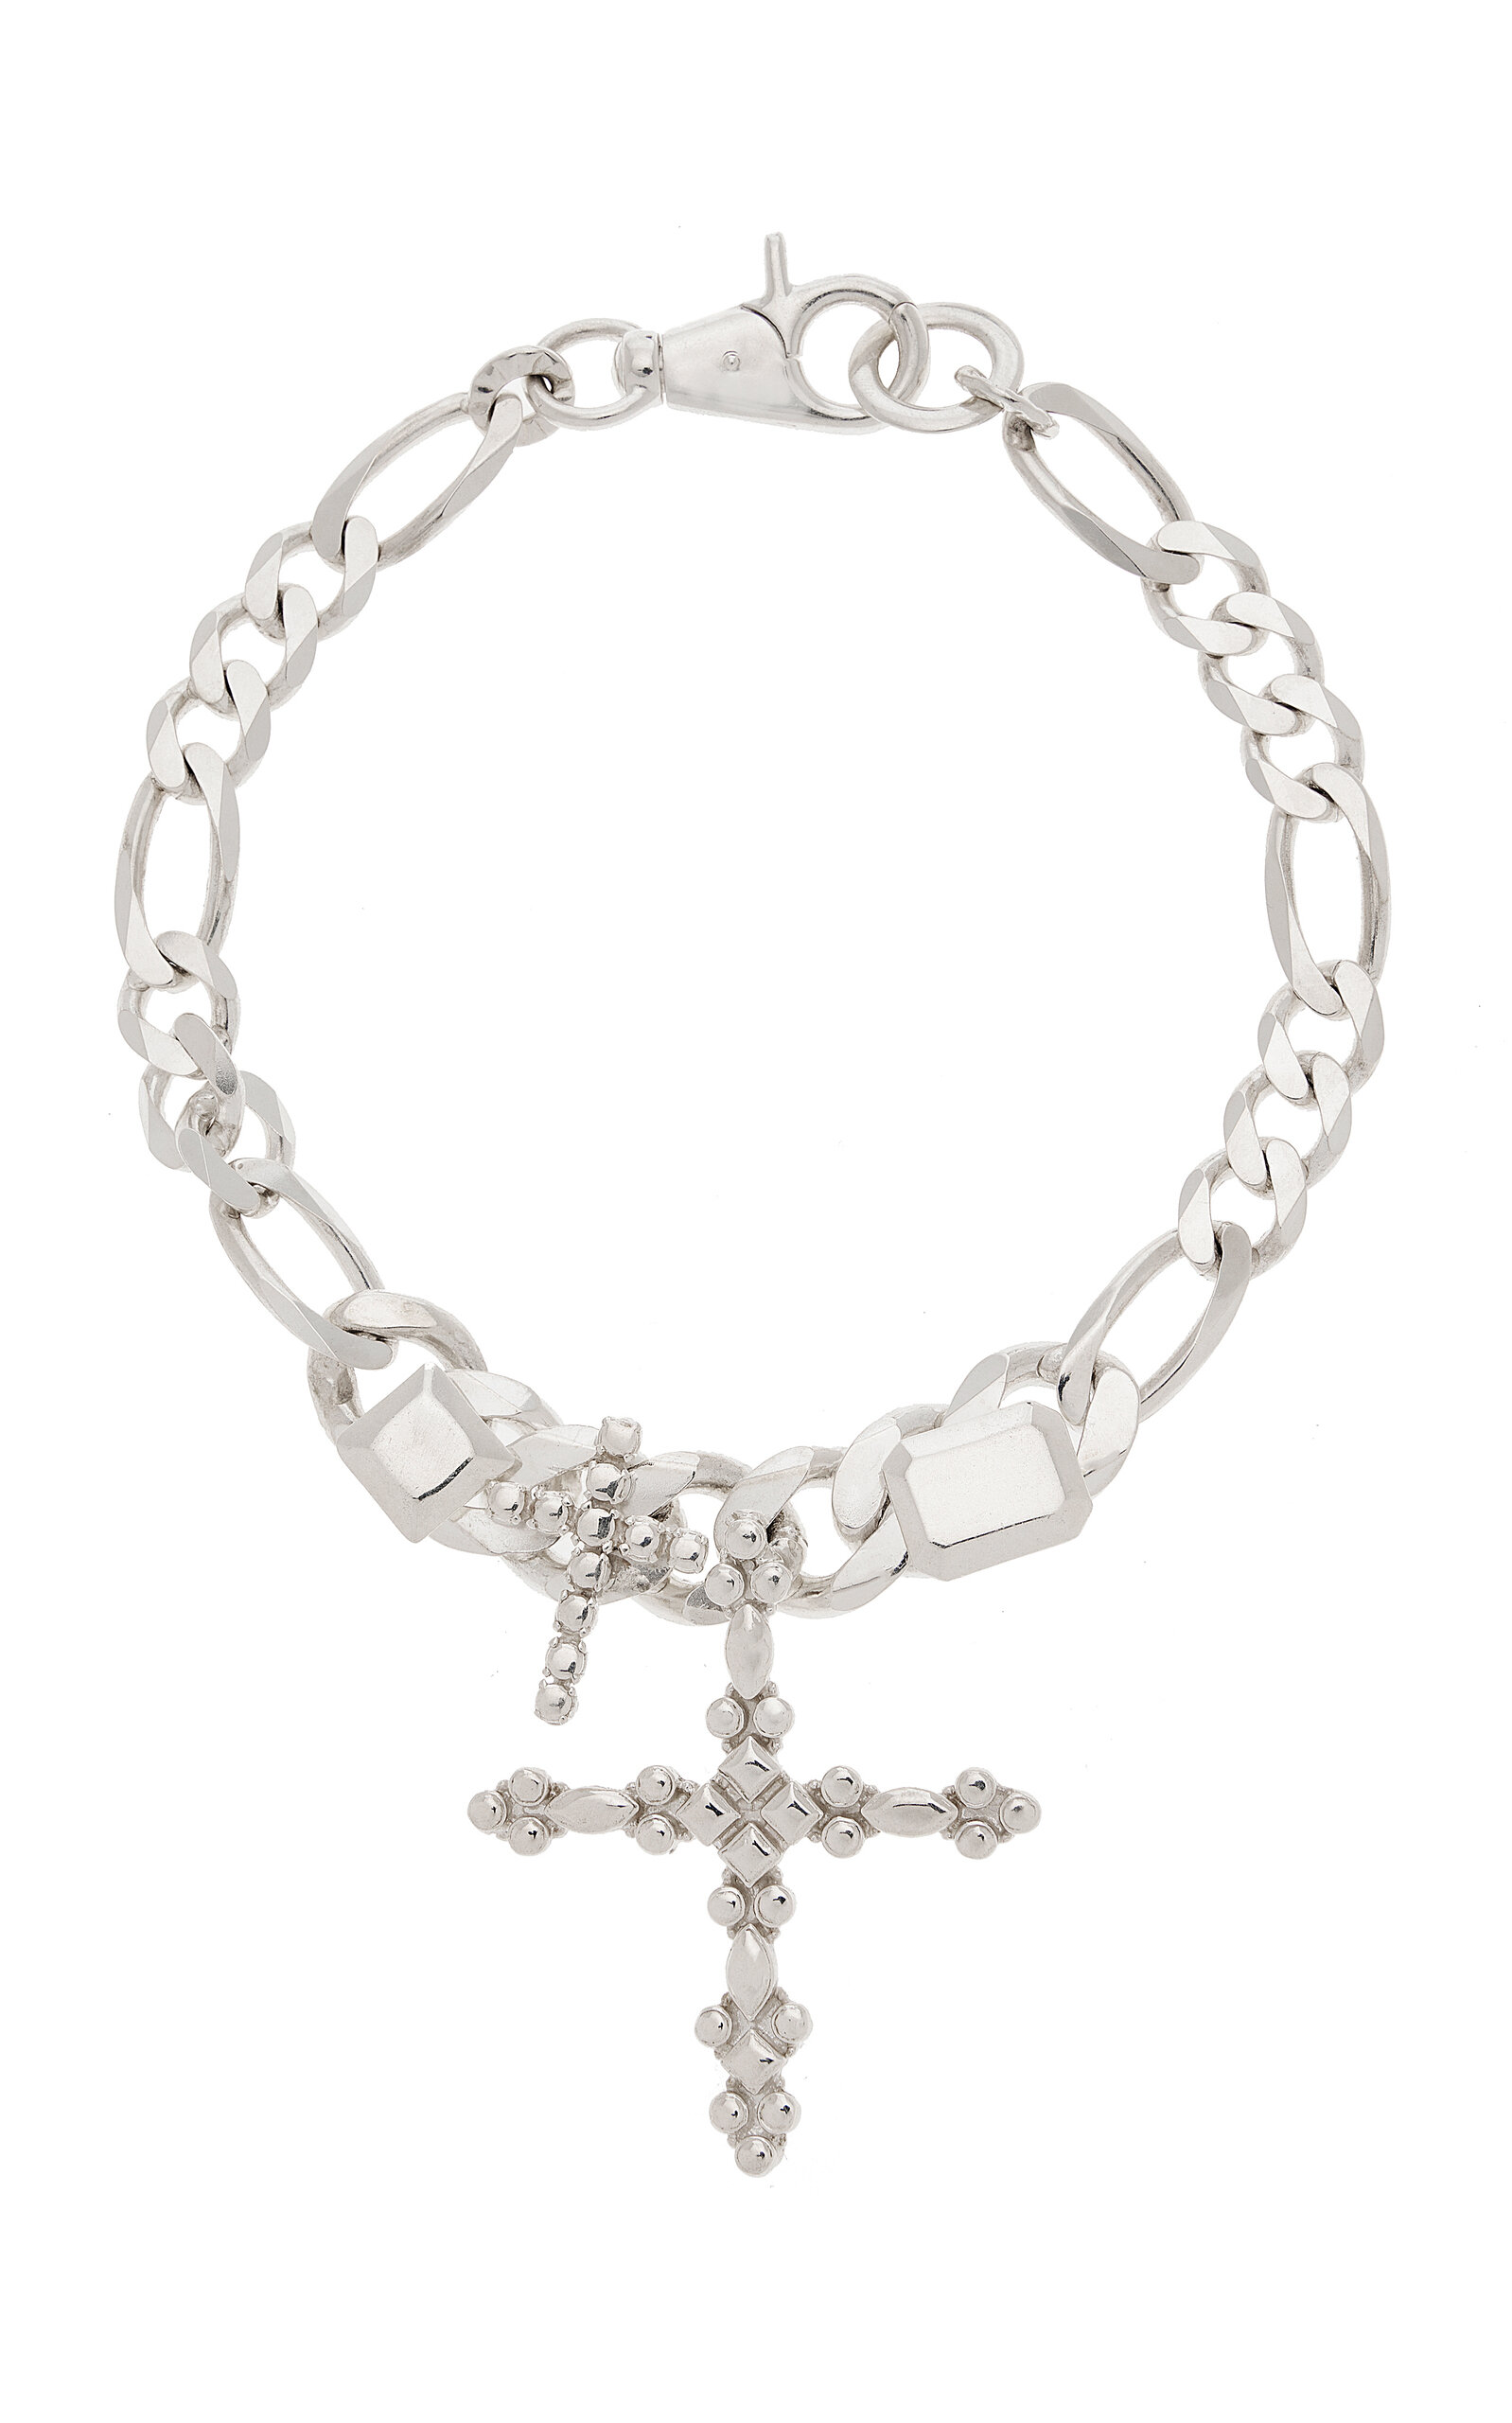 Martine Ali Women's Pauly Twin Cross Chain Necklace